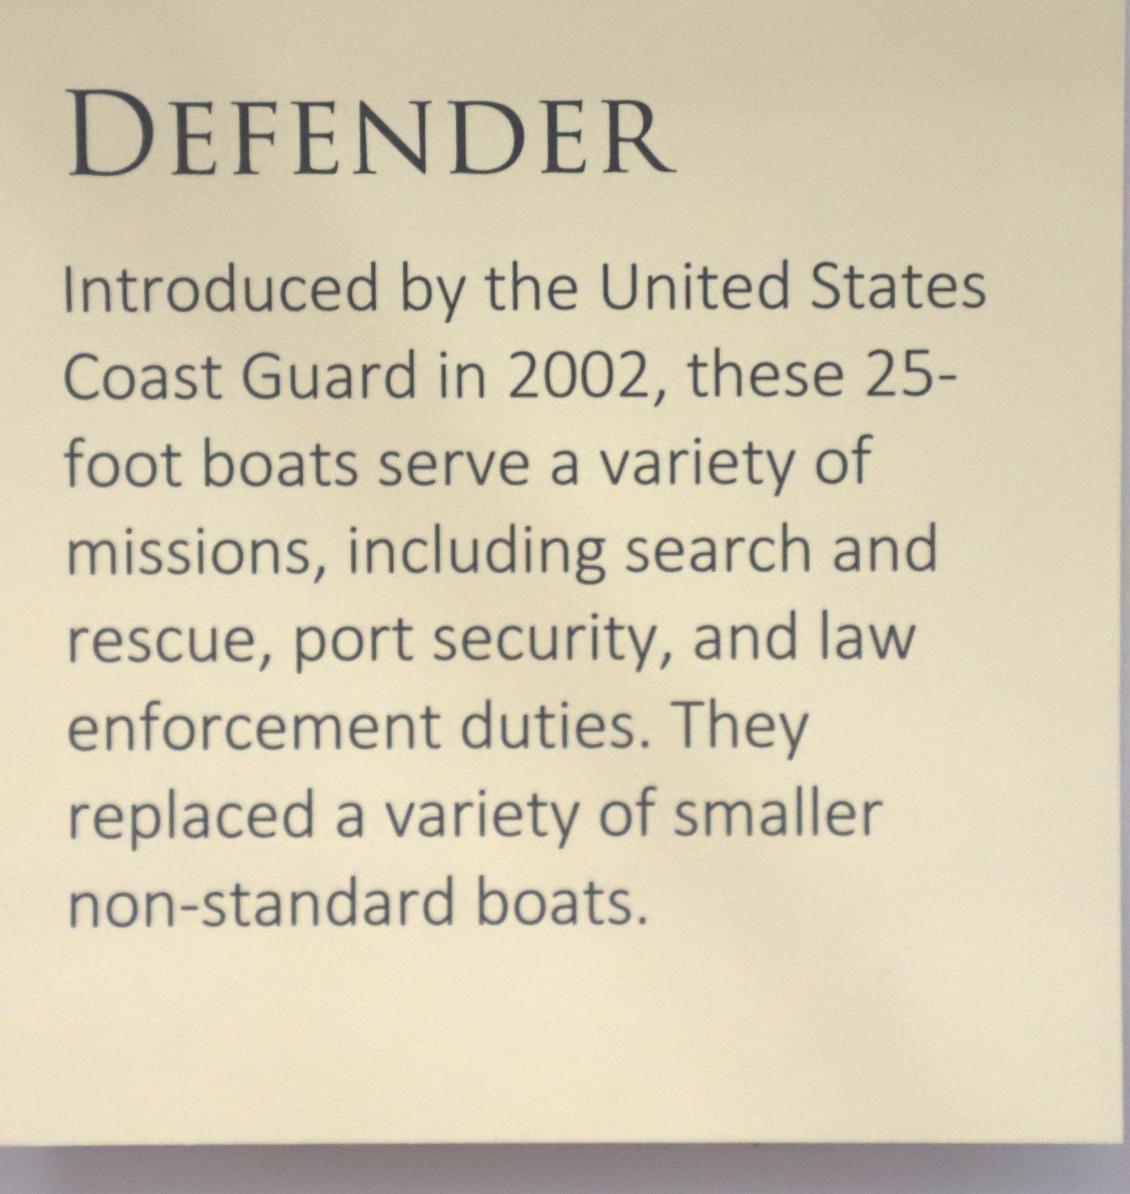 25 Foot Defender Boat - Coast Guard Heritage Museum - Barnstable Mass